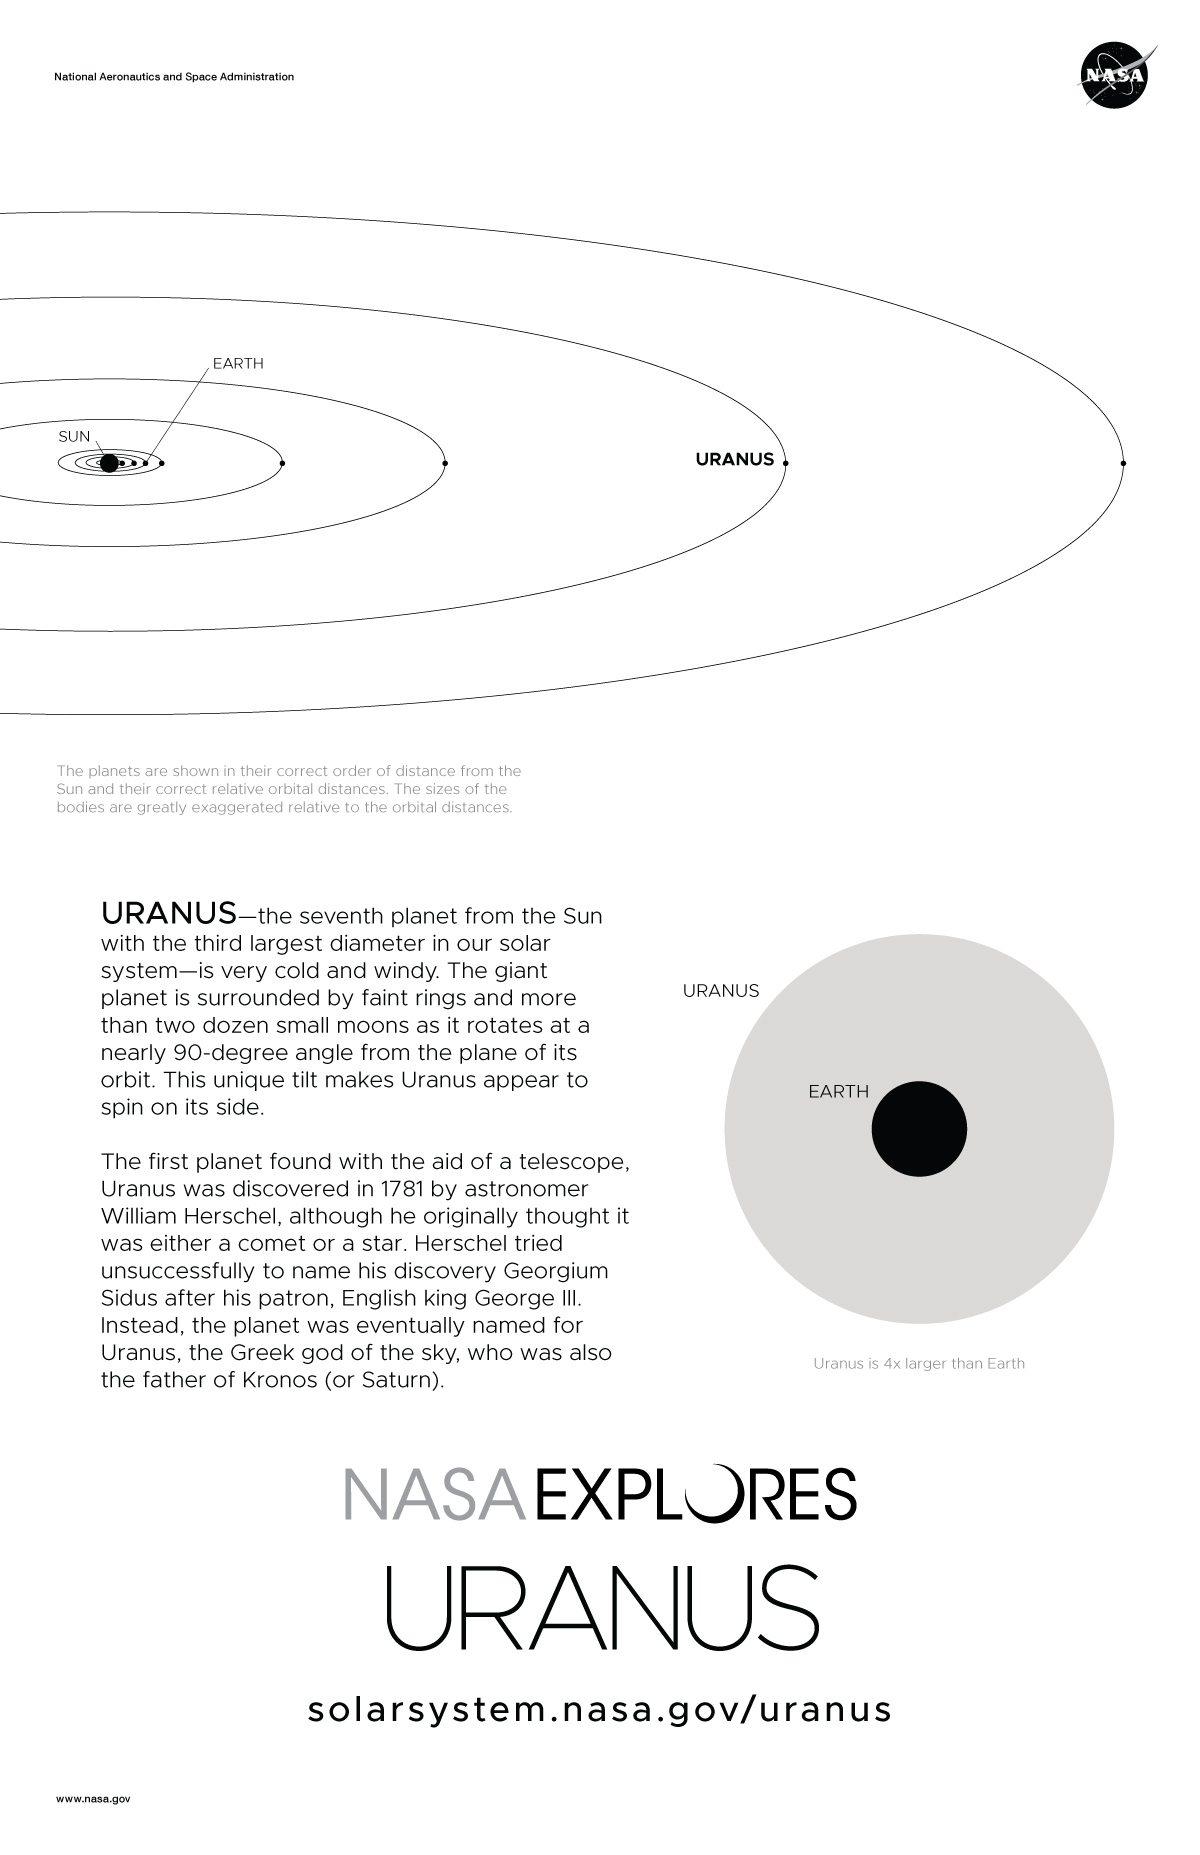 Moons of Uranus - Wikipedia